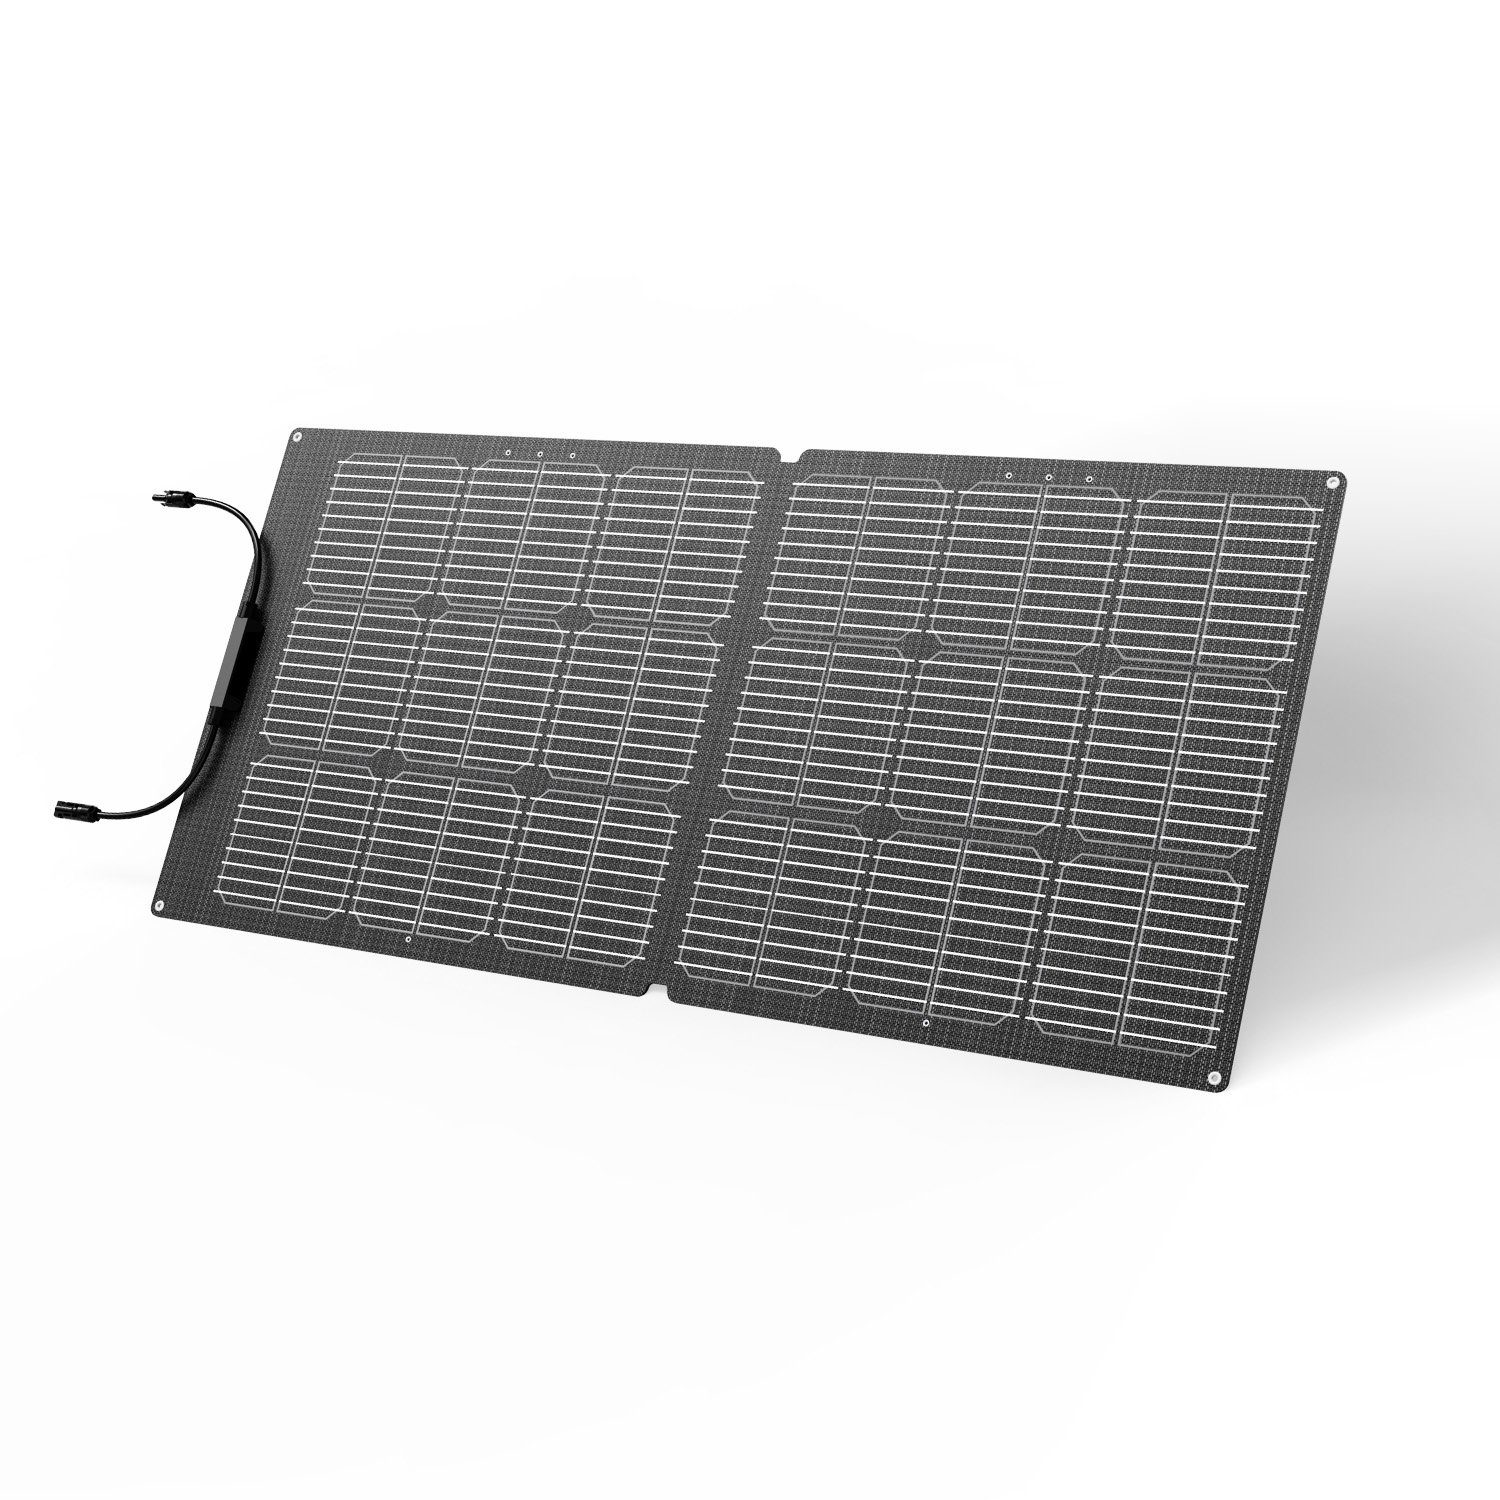 100/200W Flexible CITYSPORTS 100W PowerStation Solarmodul für Balkonkraftwerk faltbar Solaranlage FULLSENT,